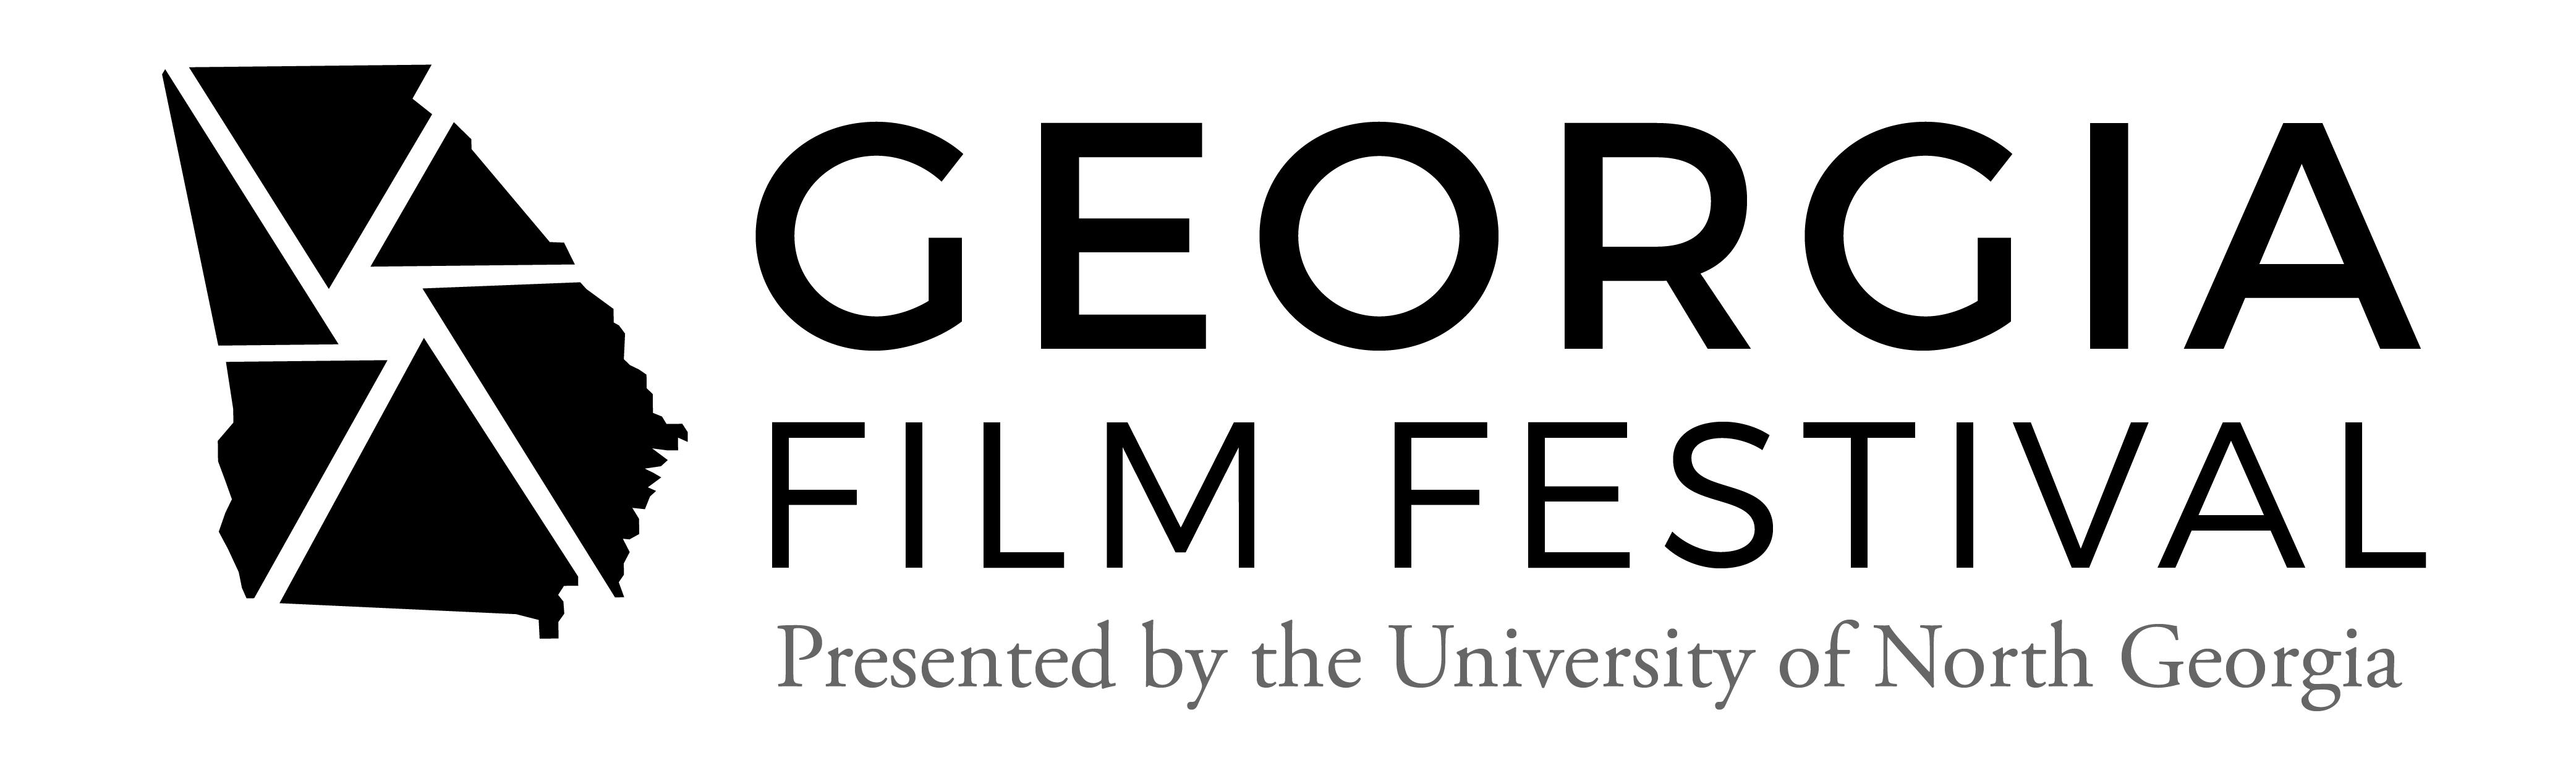 Georgia Film Festival – Oct. 2-3 2020, at the University of North ...